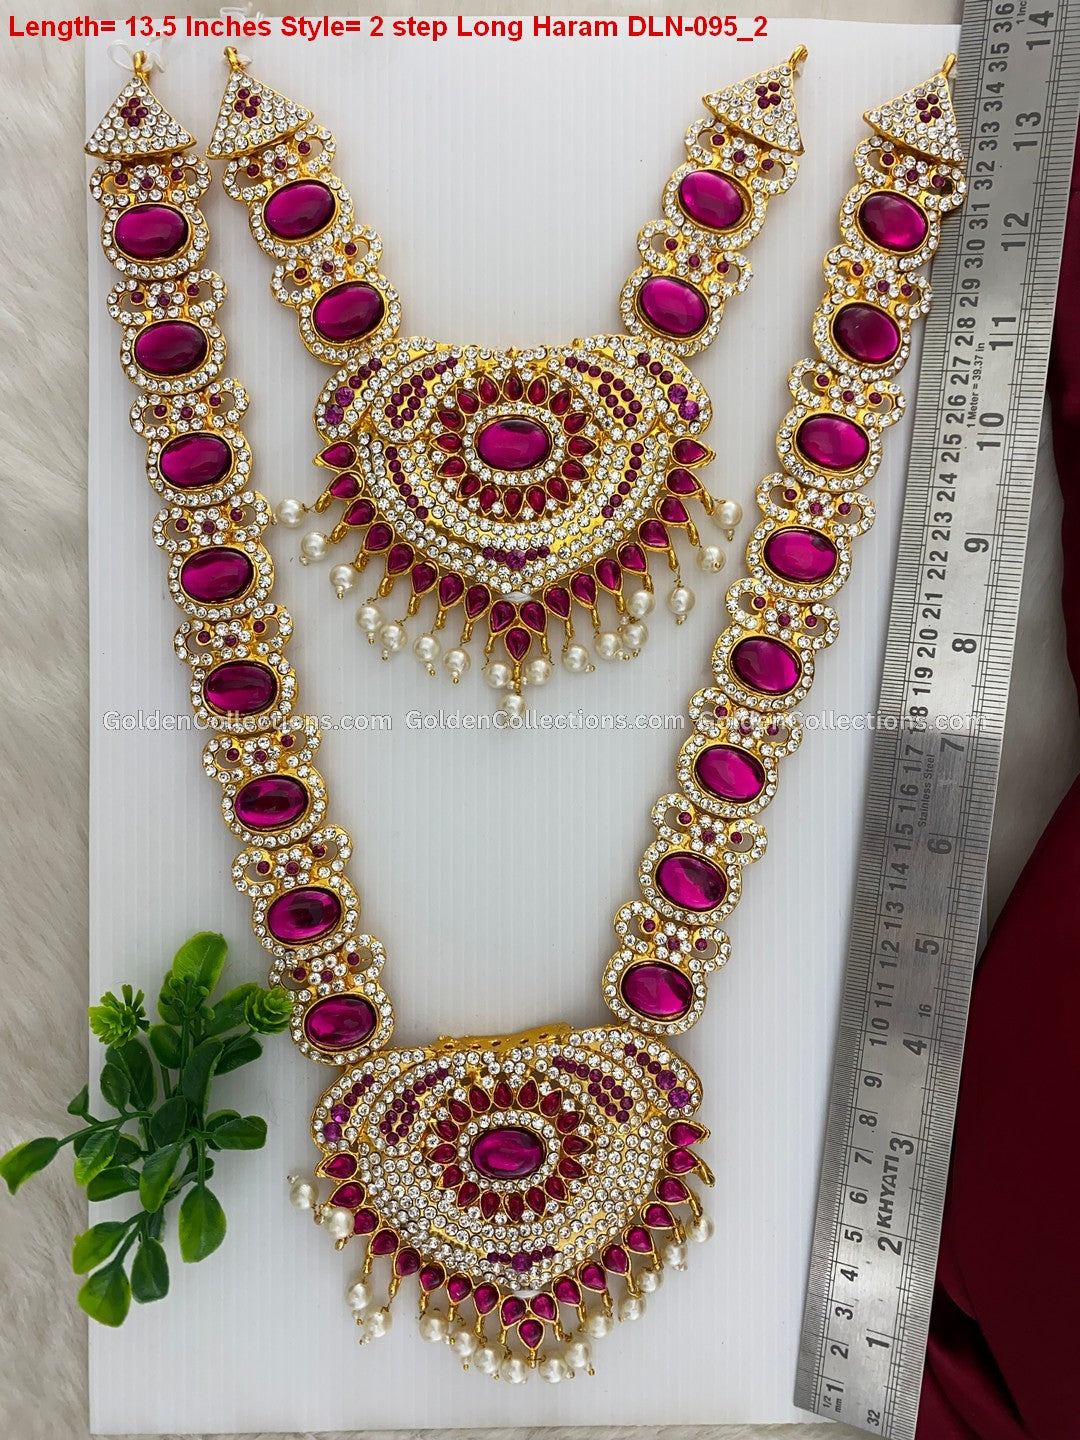 Divine Goddess Lakshmi Jewellery - Deity Long Haram DLN-095 2